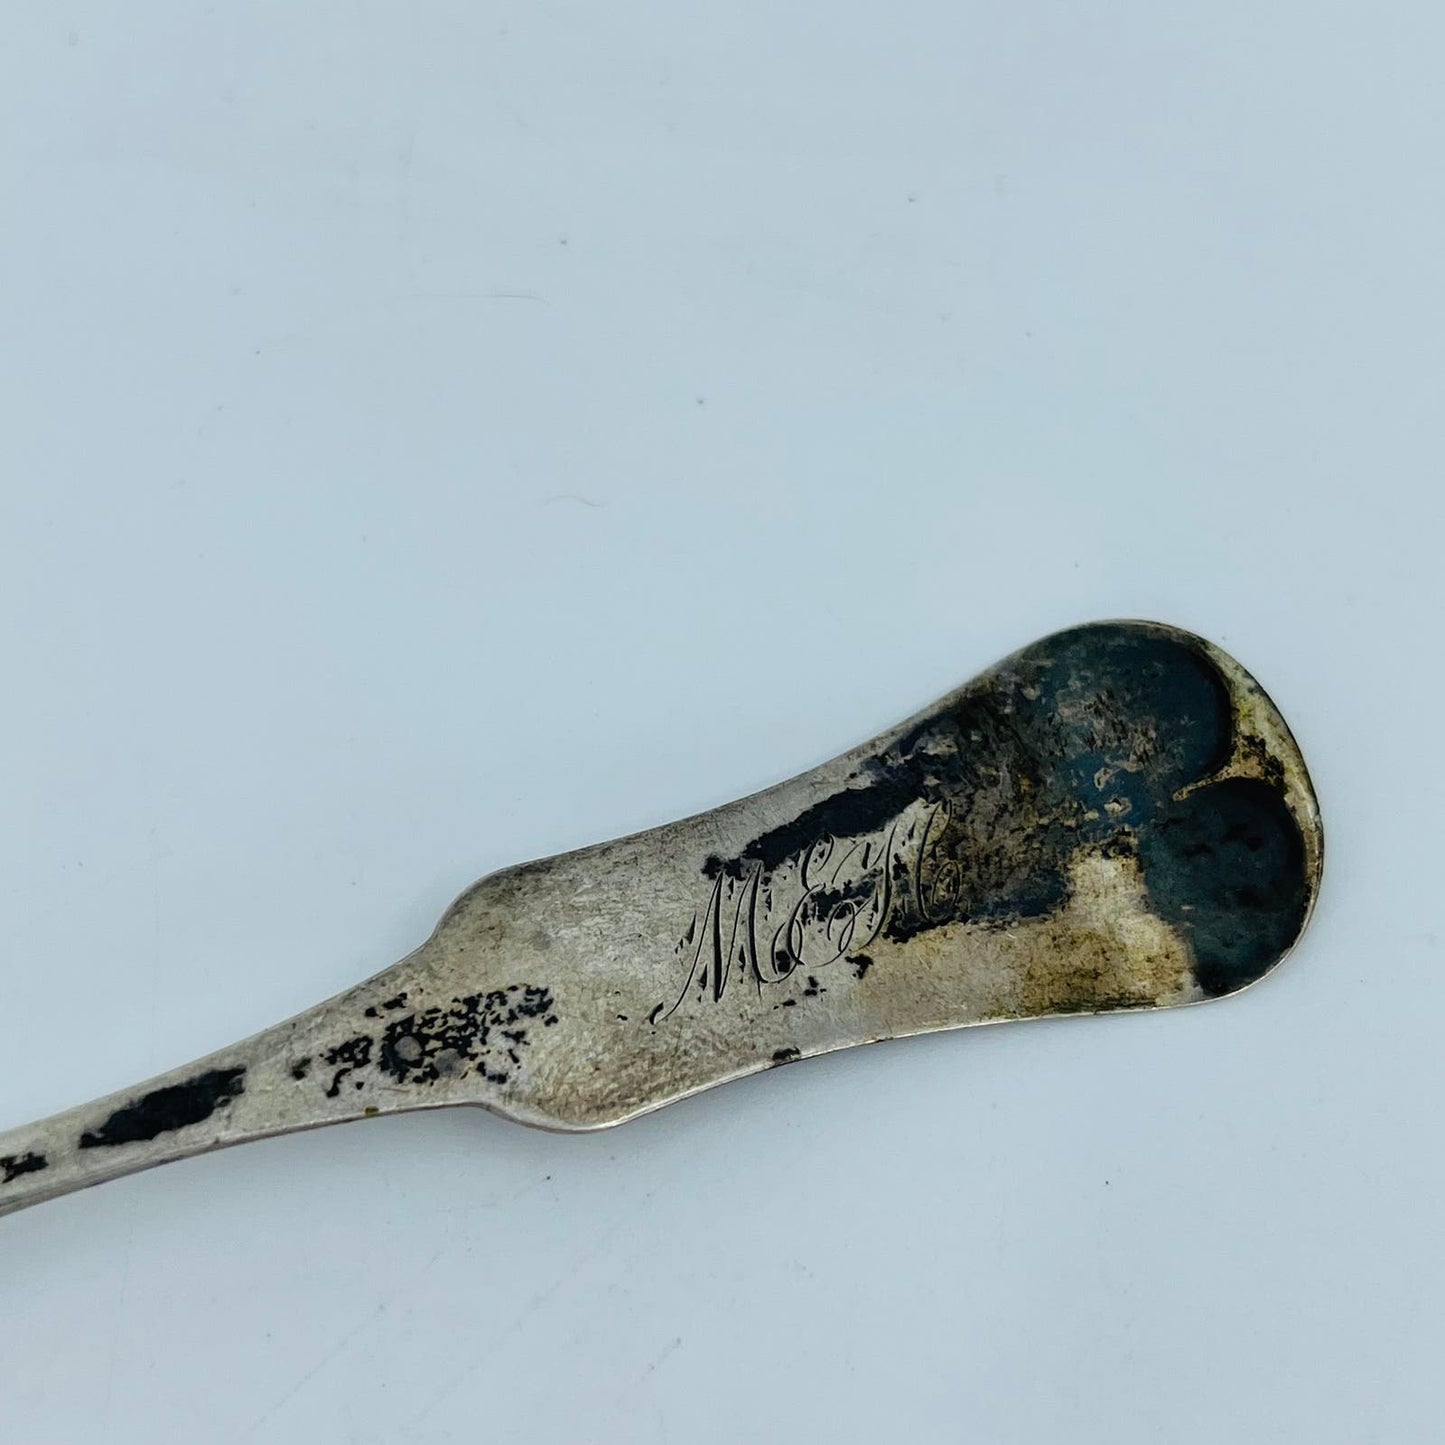 1840s E&D Kinsey Fiddle Coin Silver Spoon 5 1/4" Monogram M.E.H. SB7